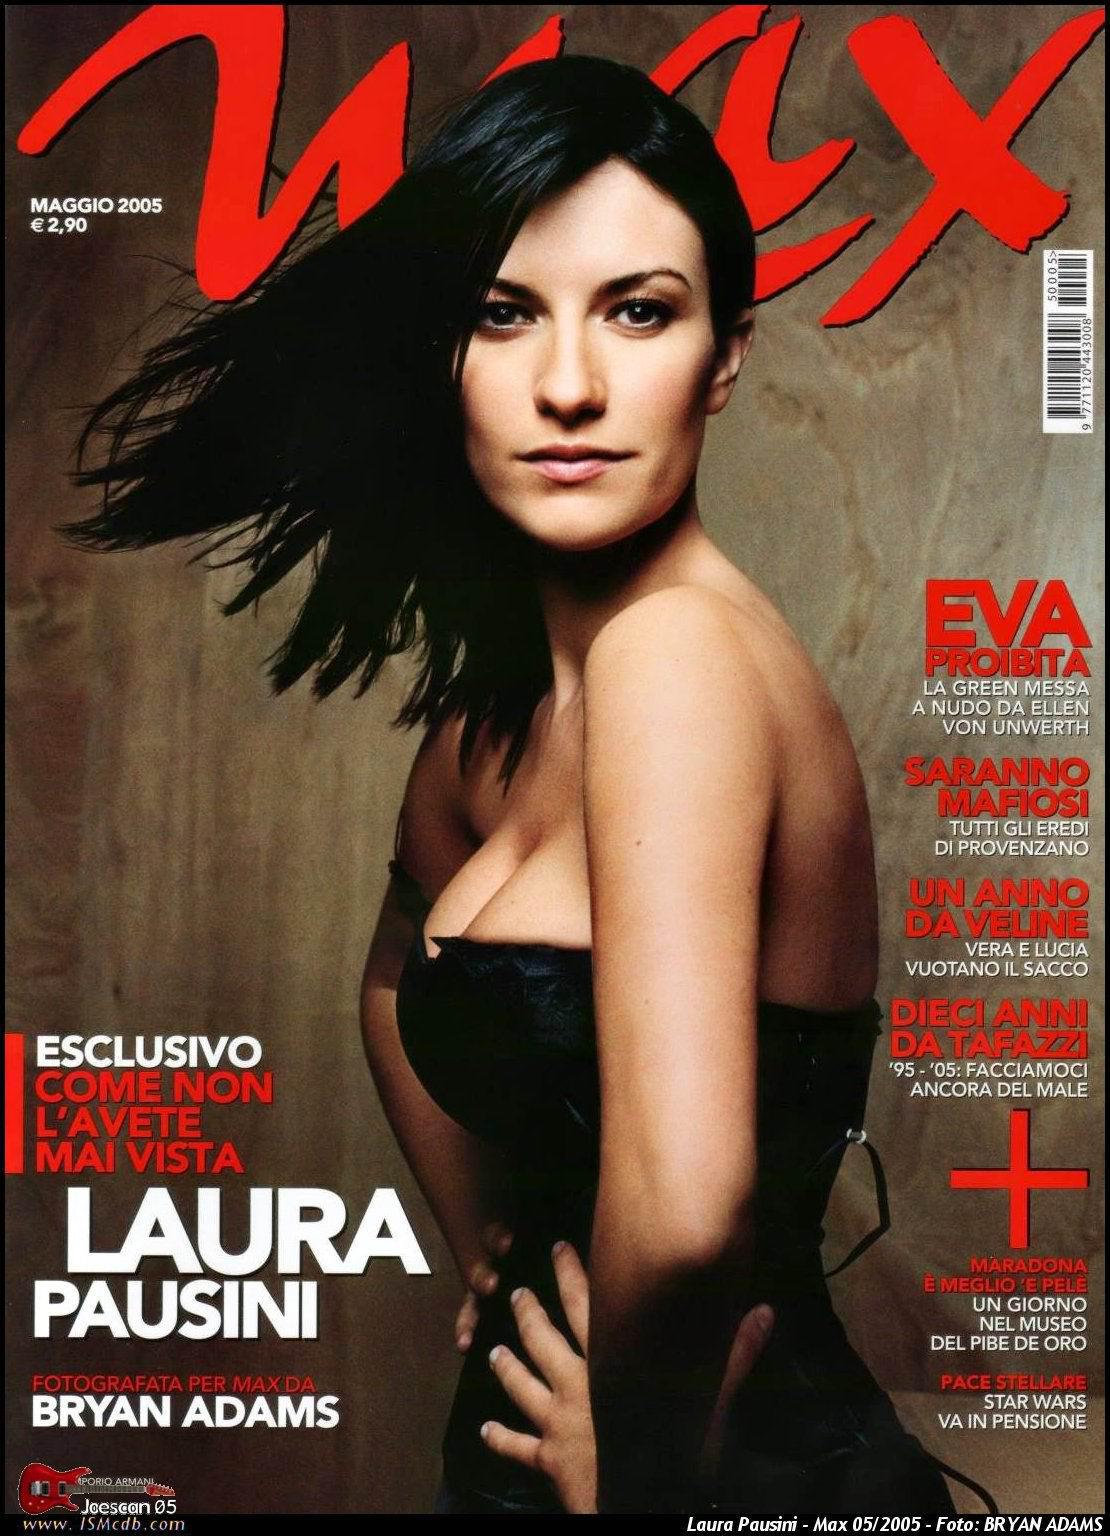 Fotos de Laura Pausini desnuda - PÃ¡gina 1 - Fotos de Famosas.TK.